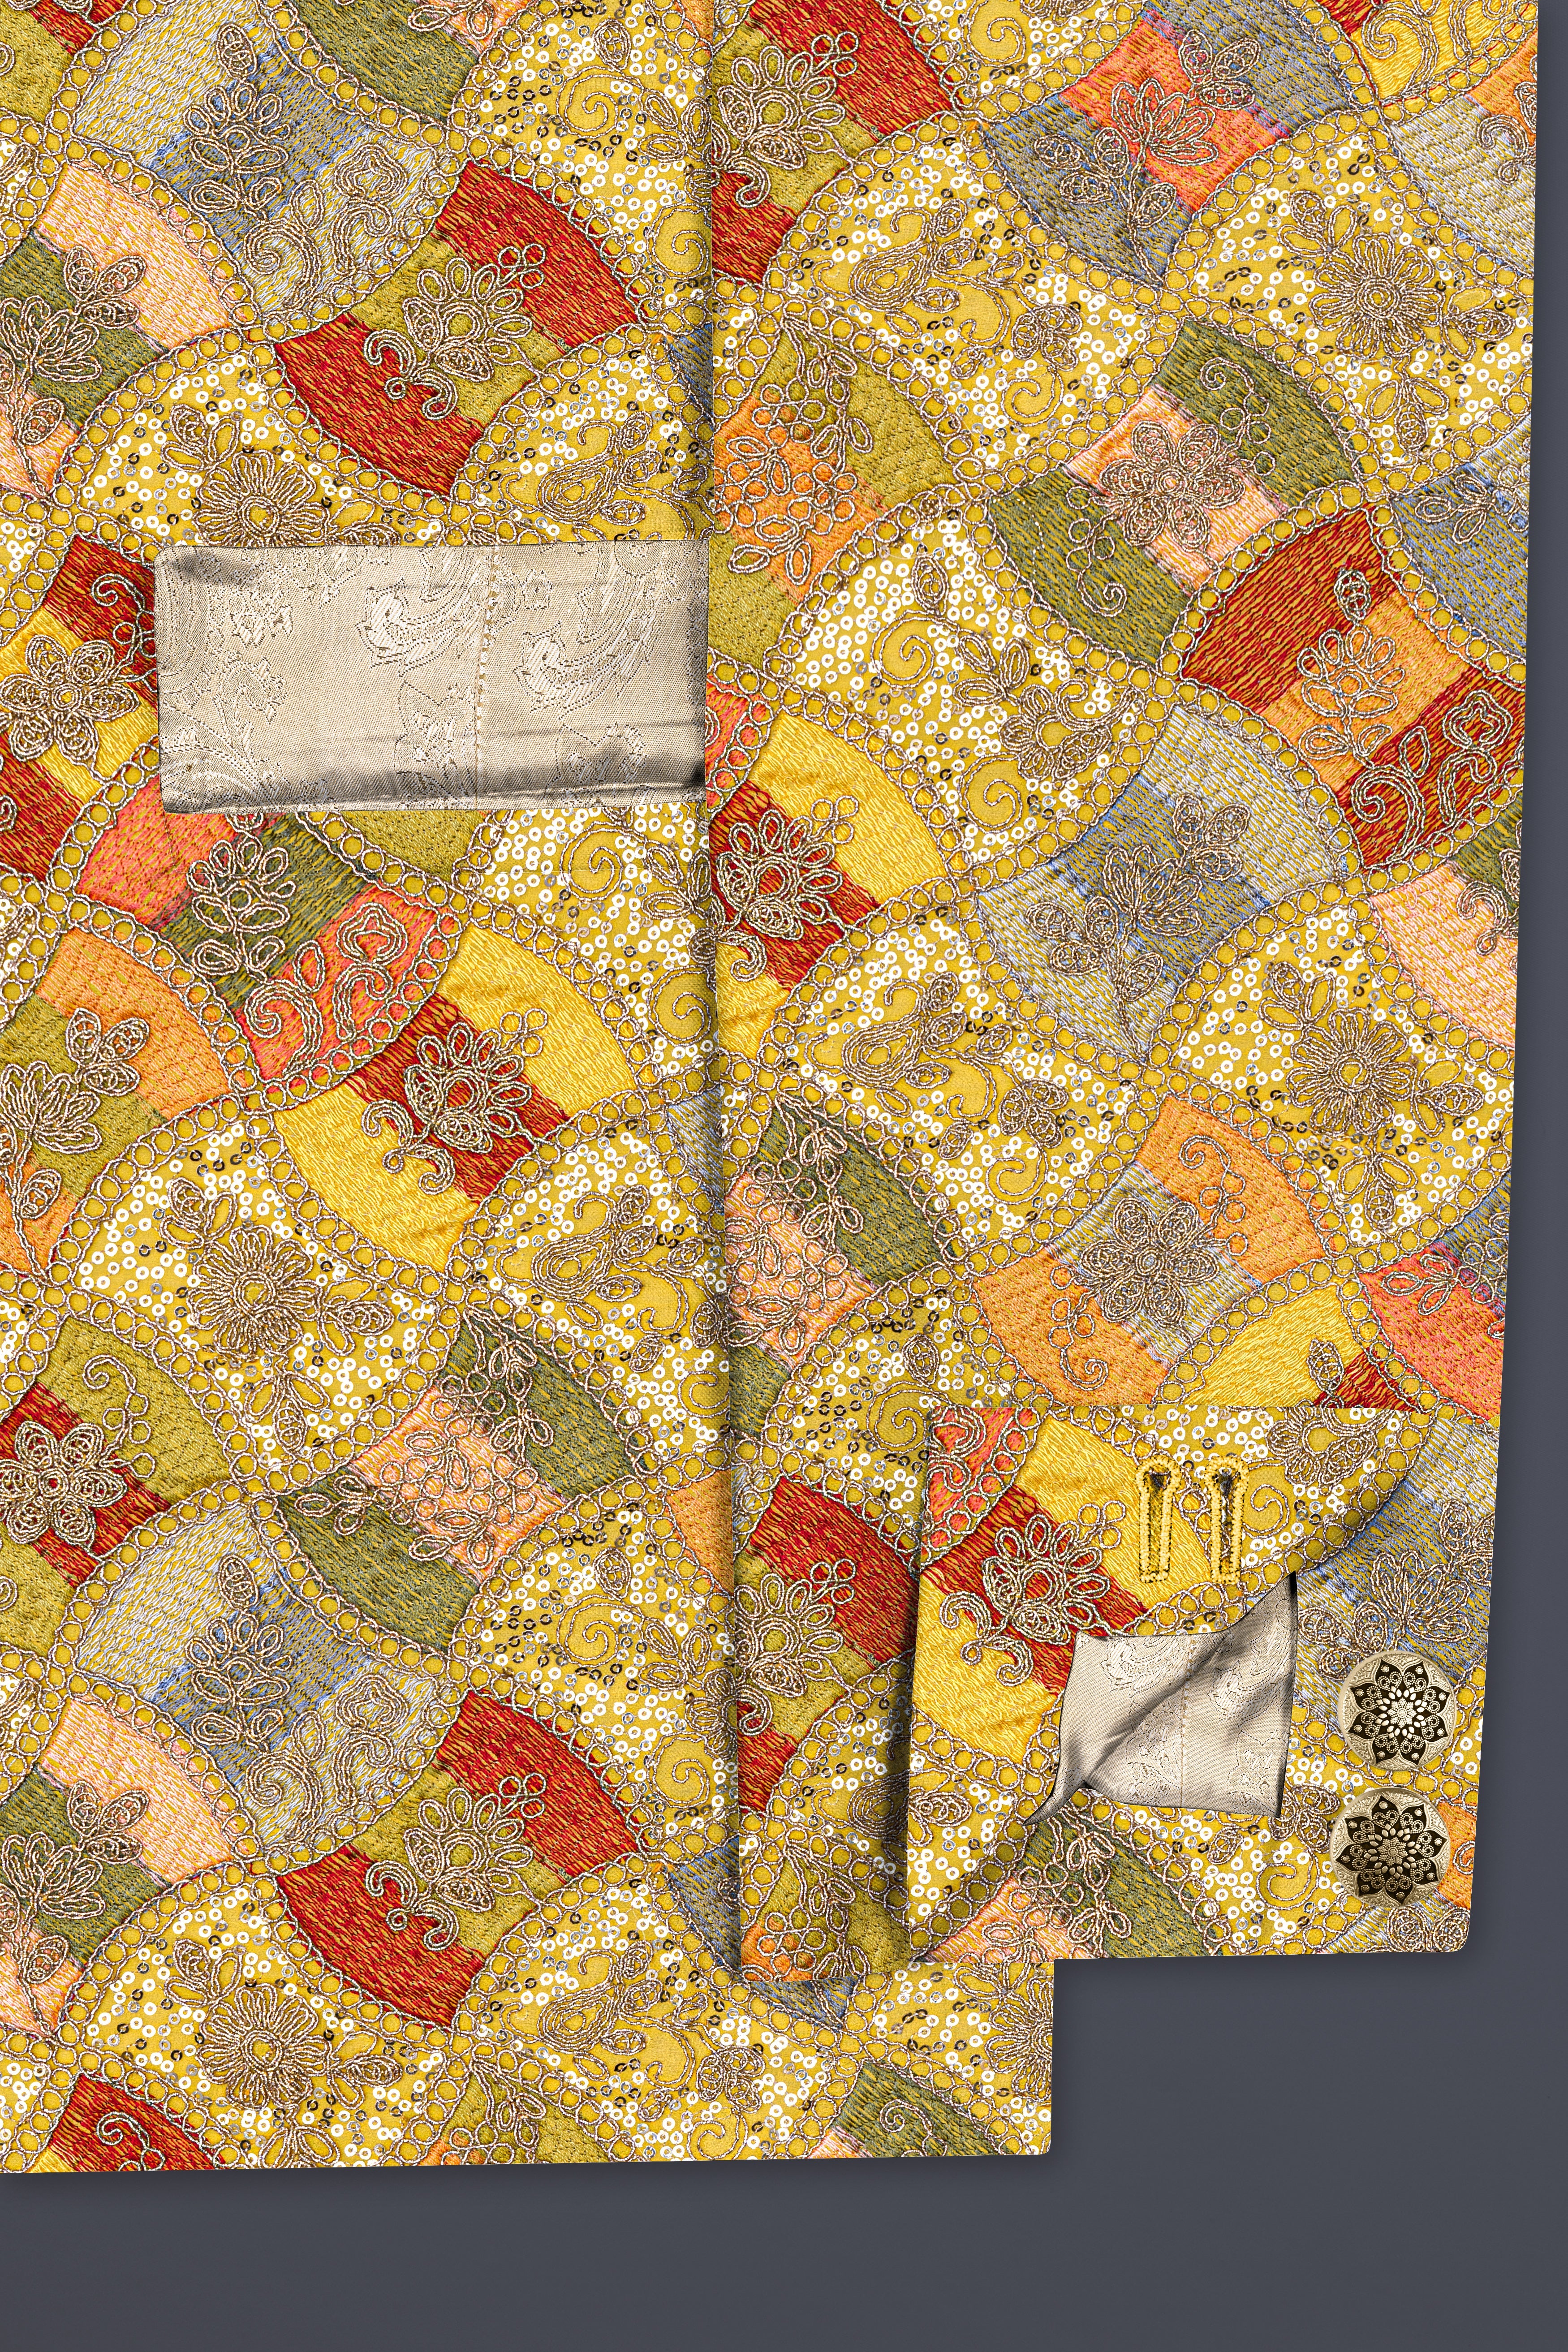 Leamon Yellow and Multicolor Embroidery Printed Cross Placket Bandhgala Jodhpuri